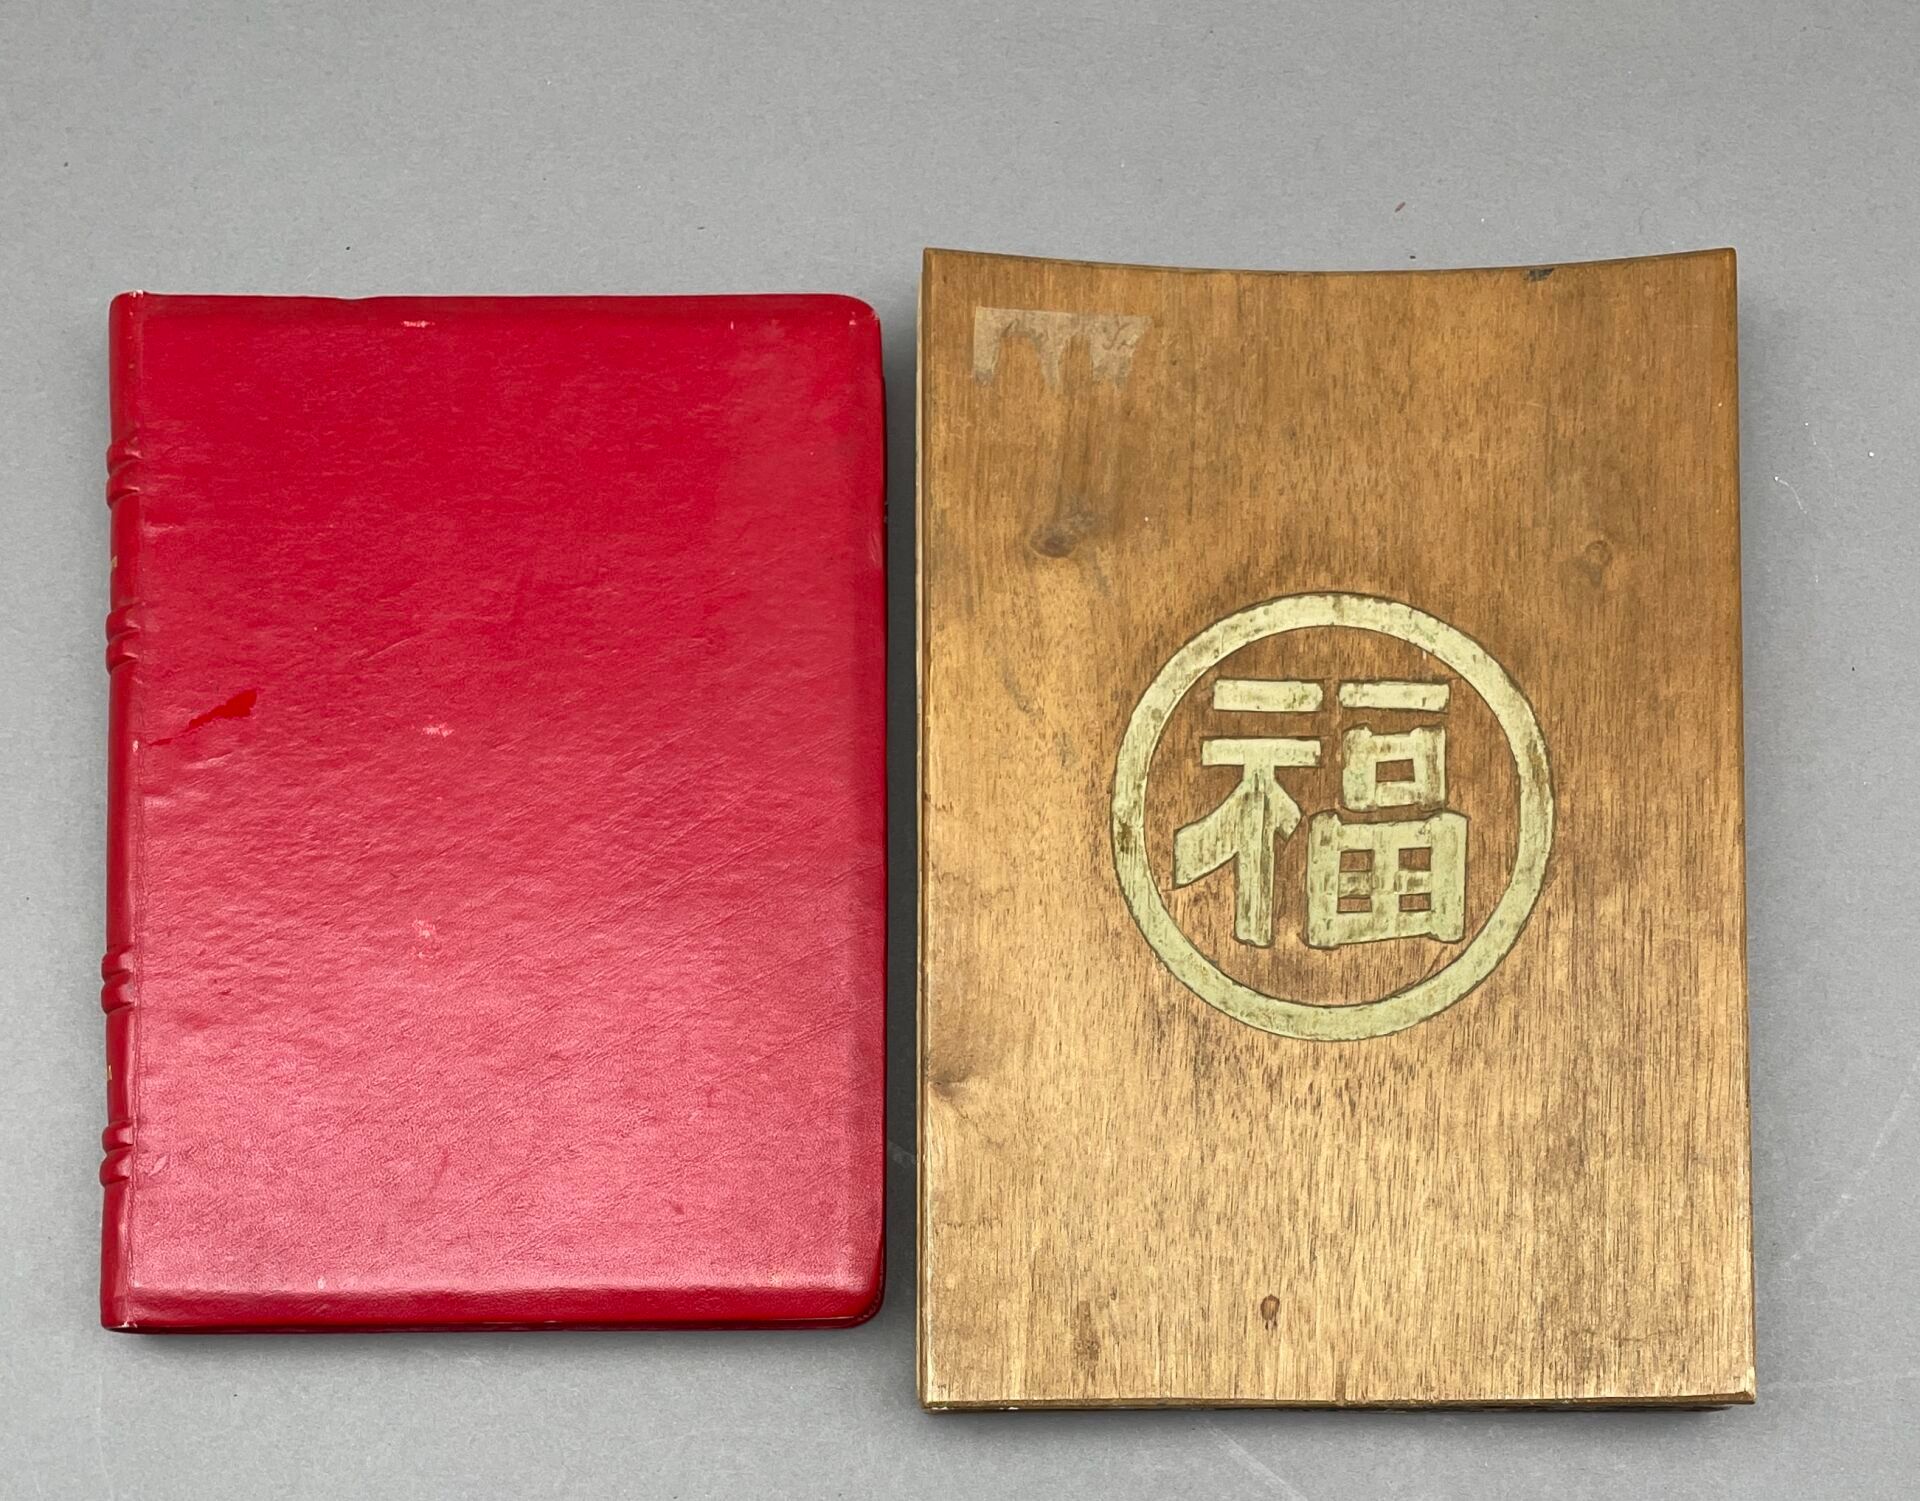 Null 约 1920 年。
一本关于中国古代名人和美女的书。 
手风琴书（leporello），木质封面上刻有 "福 "字，内页交替出现文字和丝绸肖像。 
此&hellip;